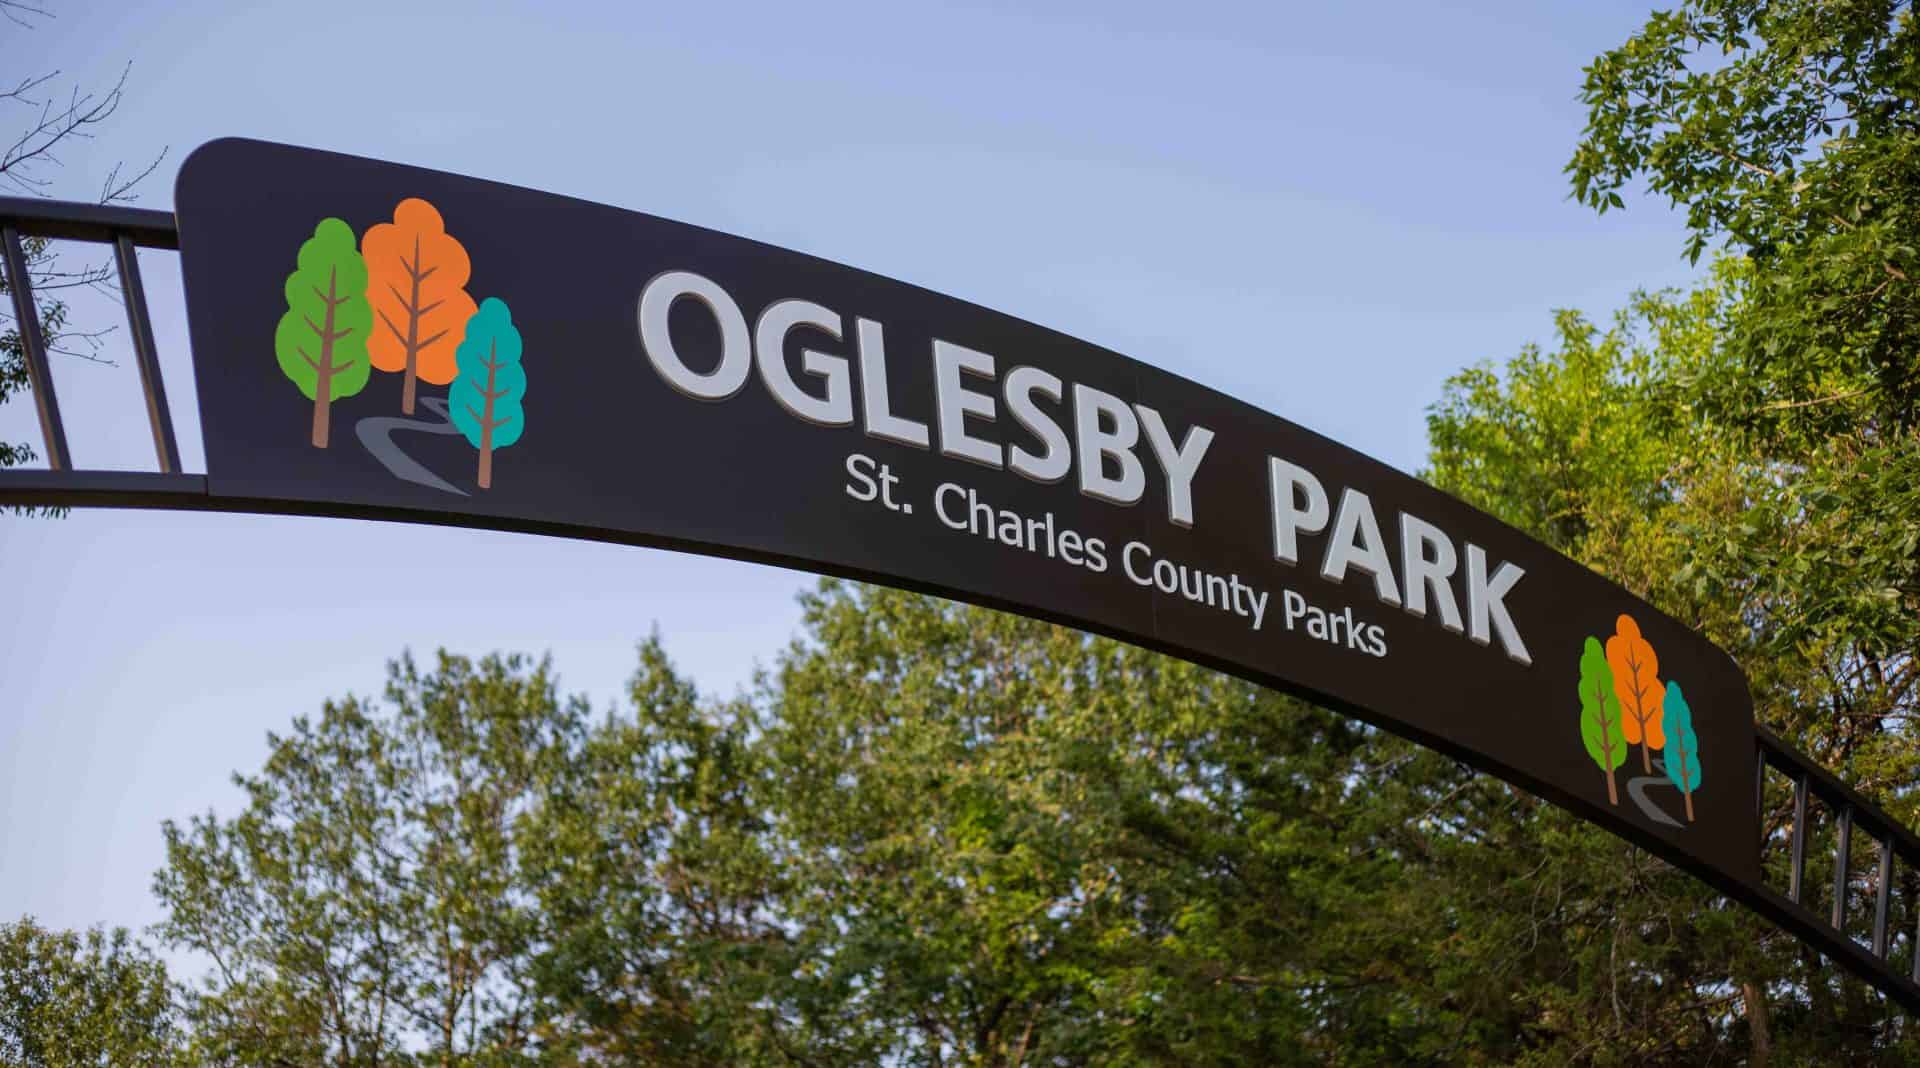 oglesby park entrance sign csutom made branded for new park